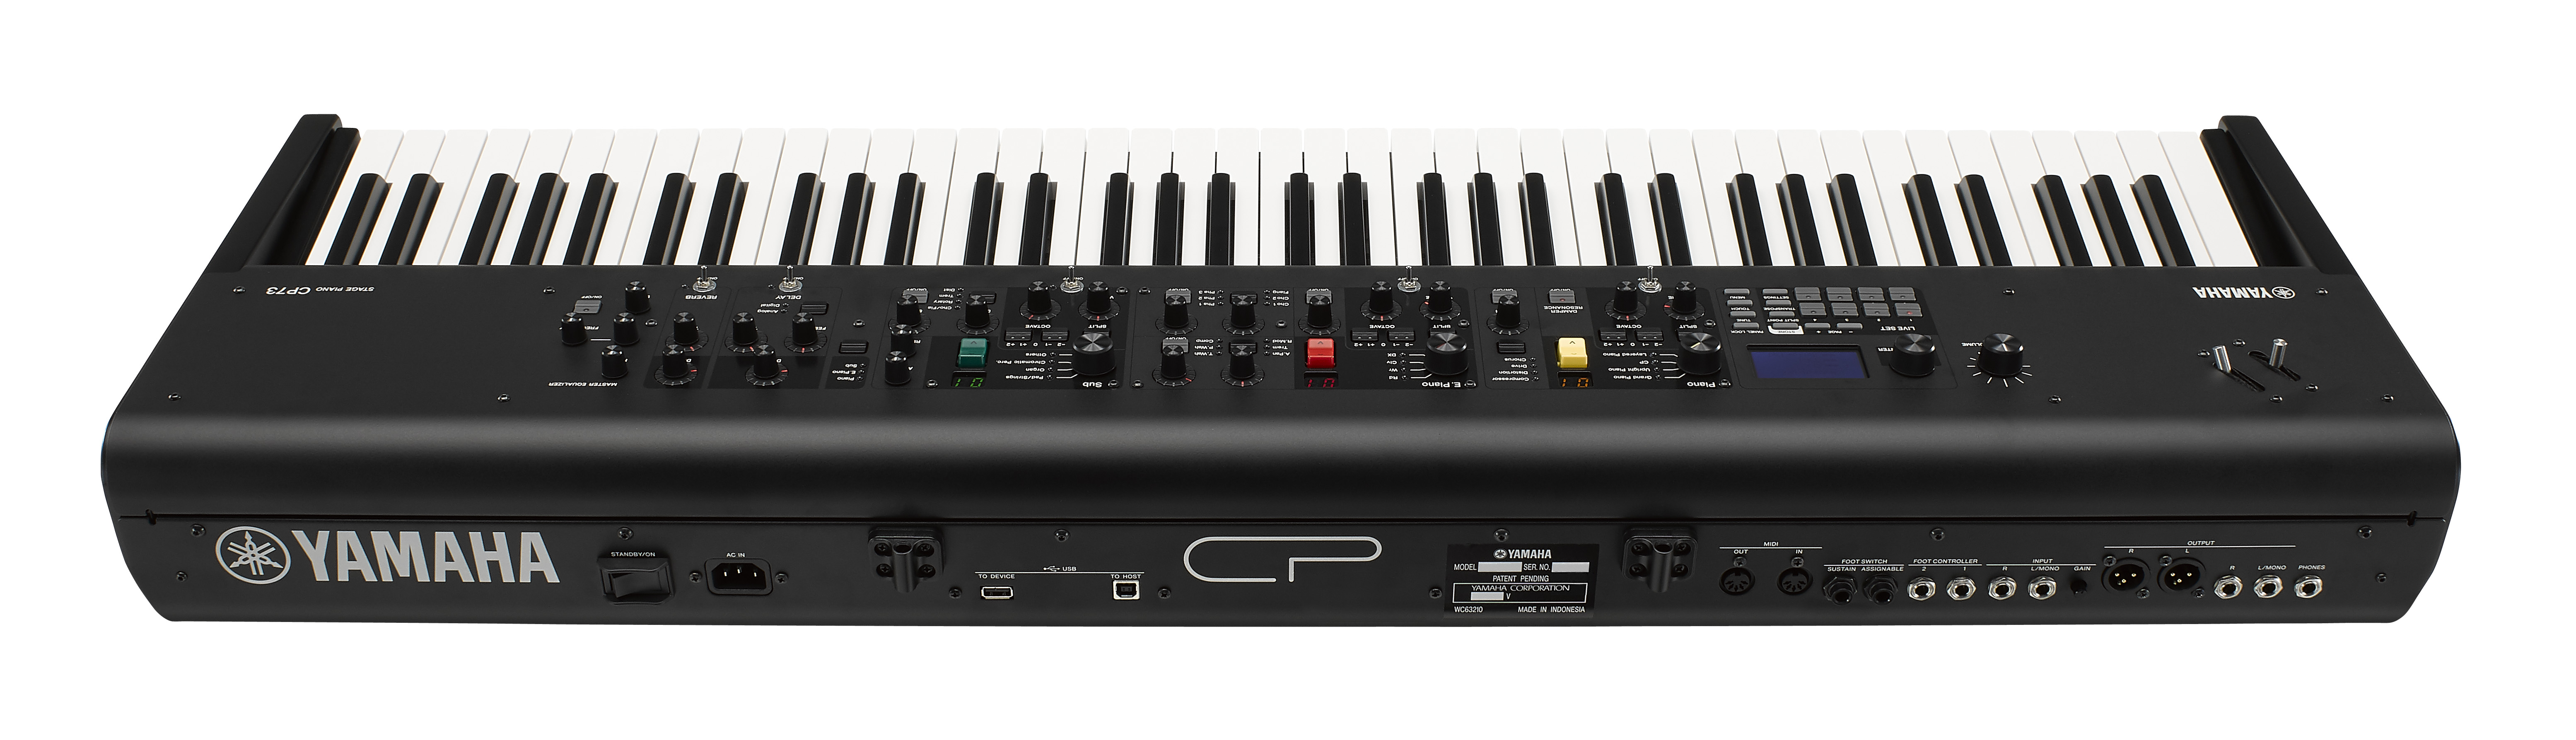 Yamaha Cp73 - Stage keyboard - Variation 2